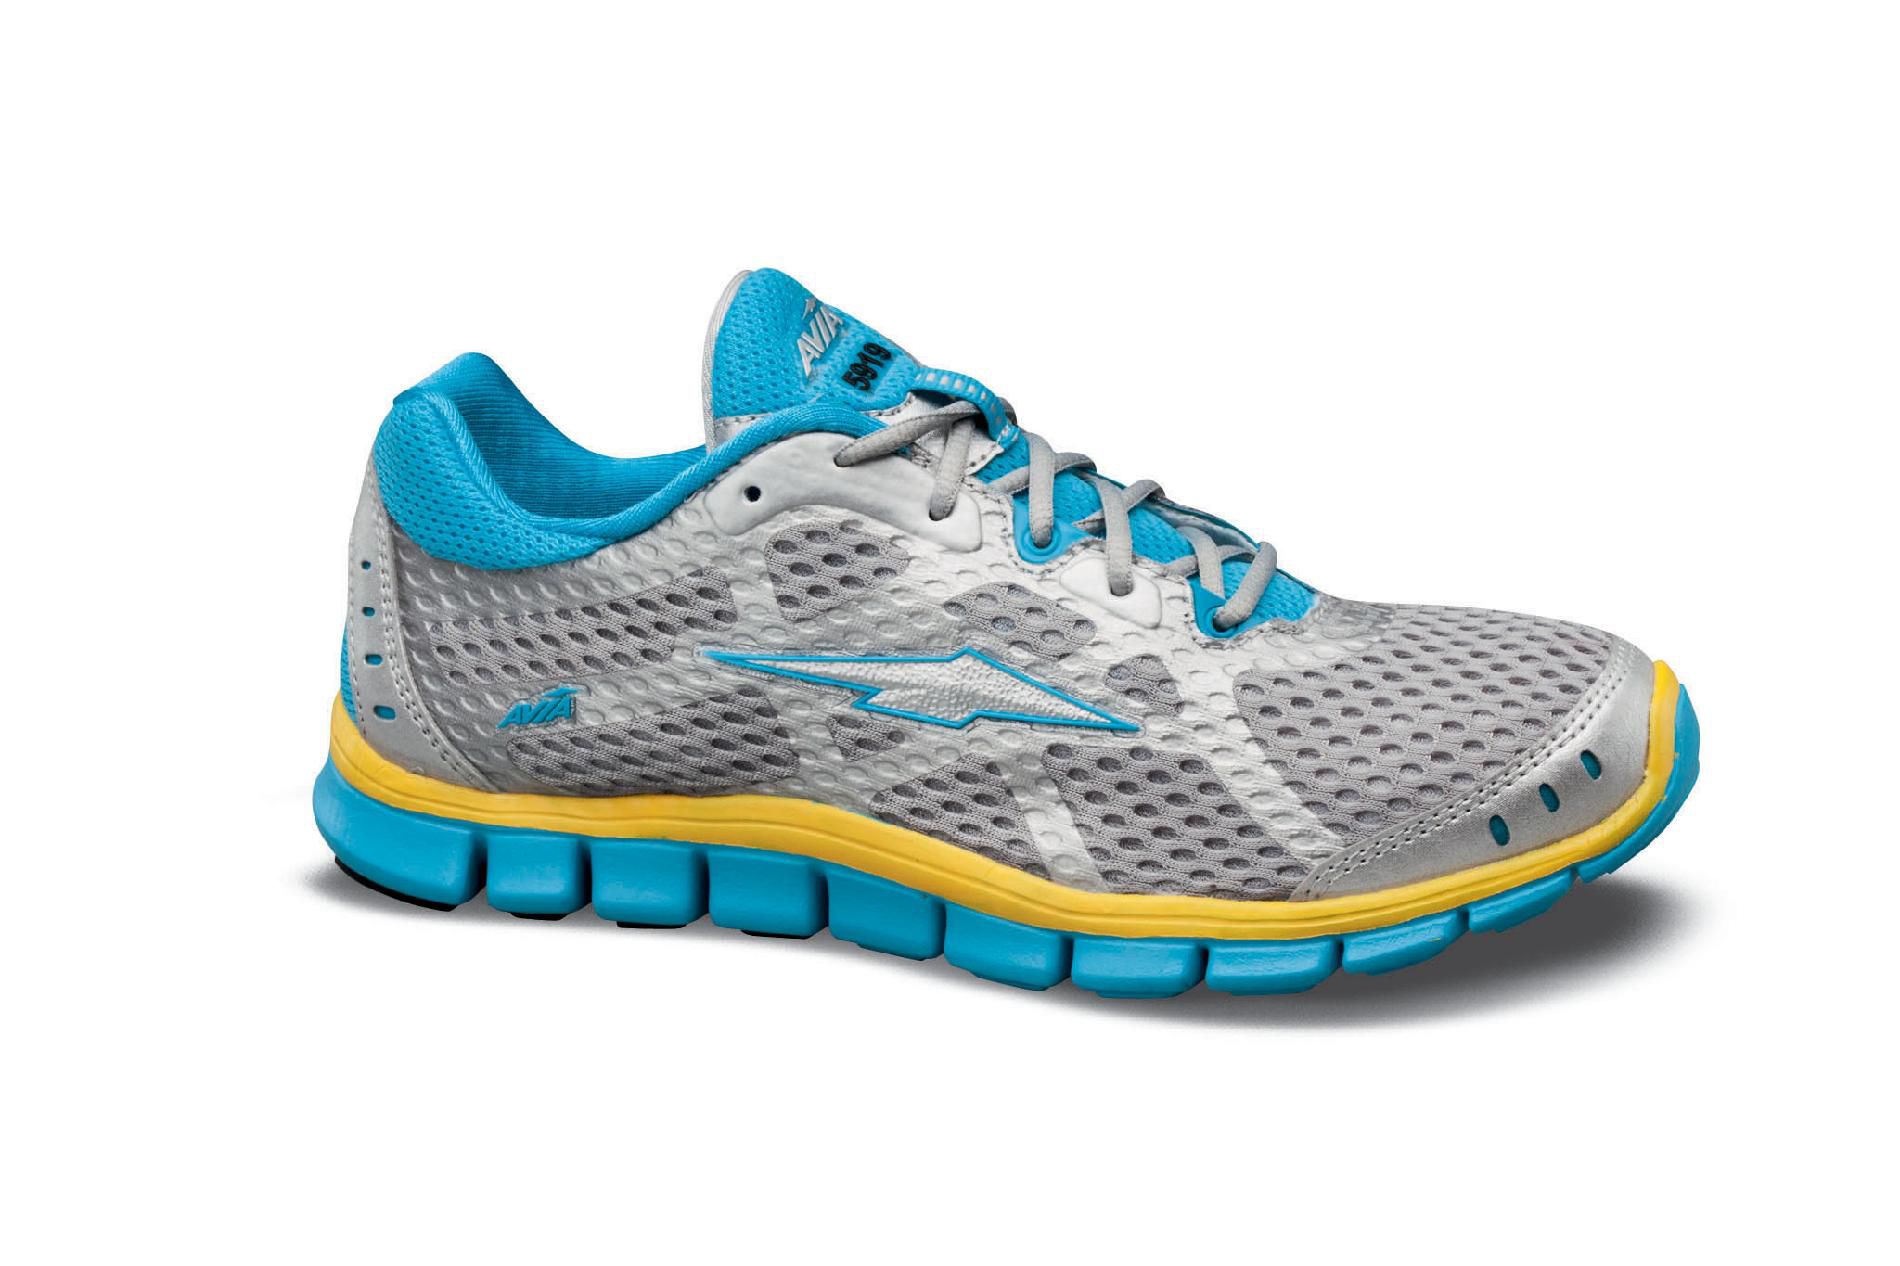 Avia Women's CC Tech Running Athletic Shoe - Silver/Blue